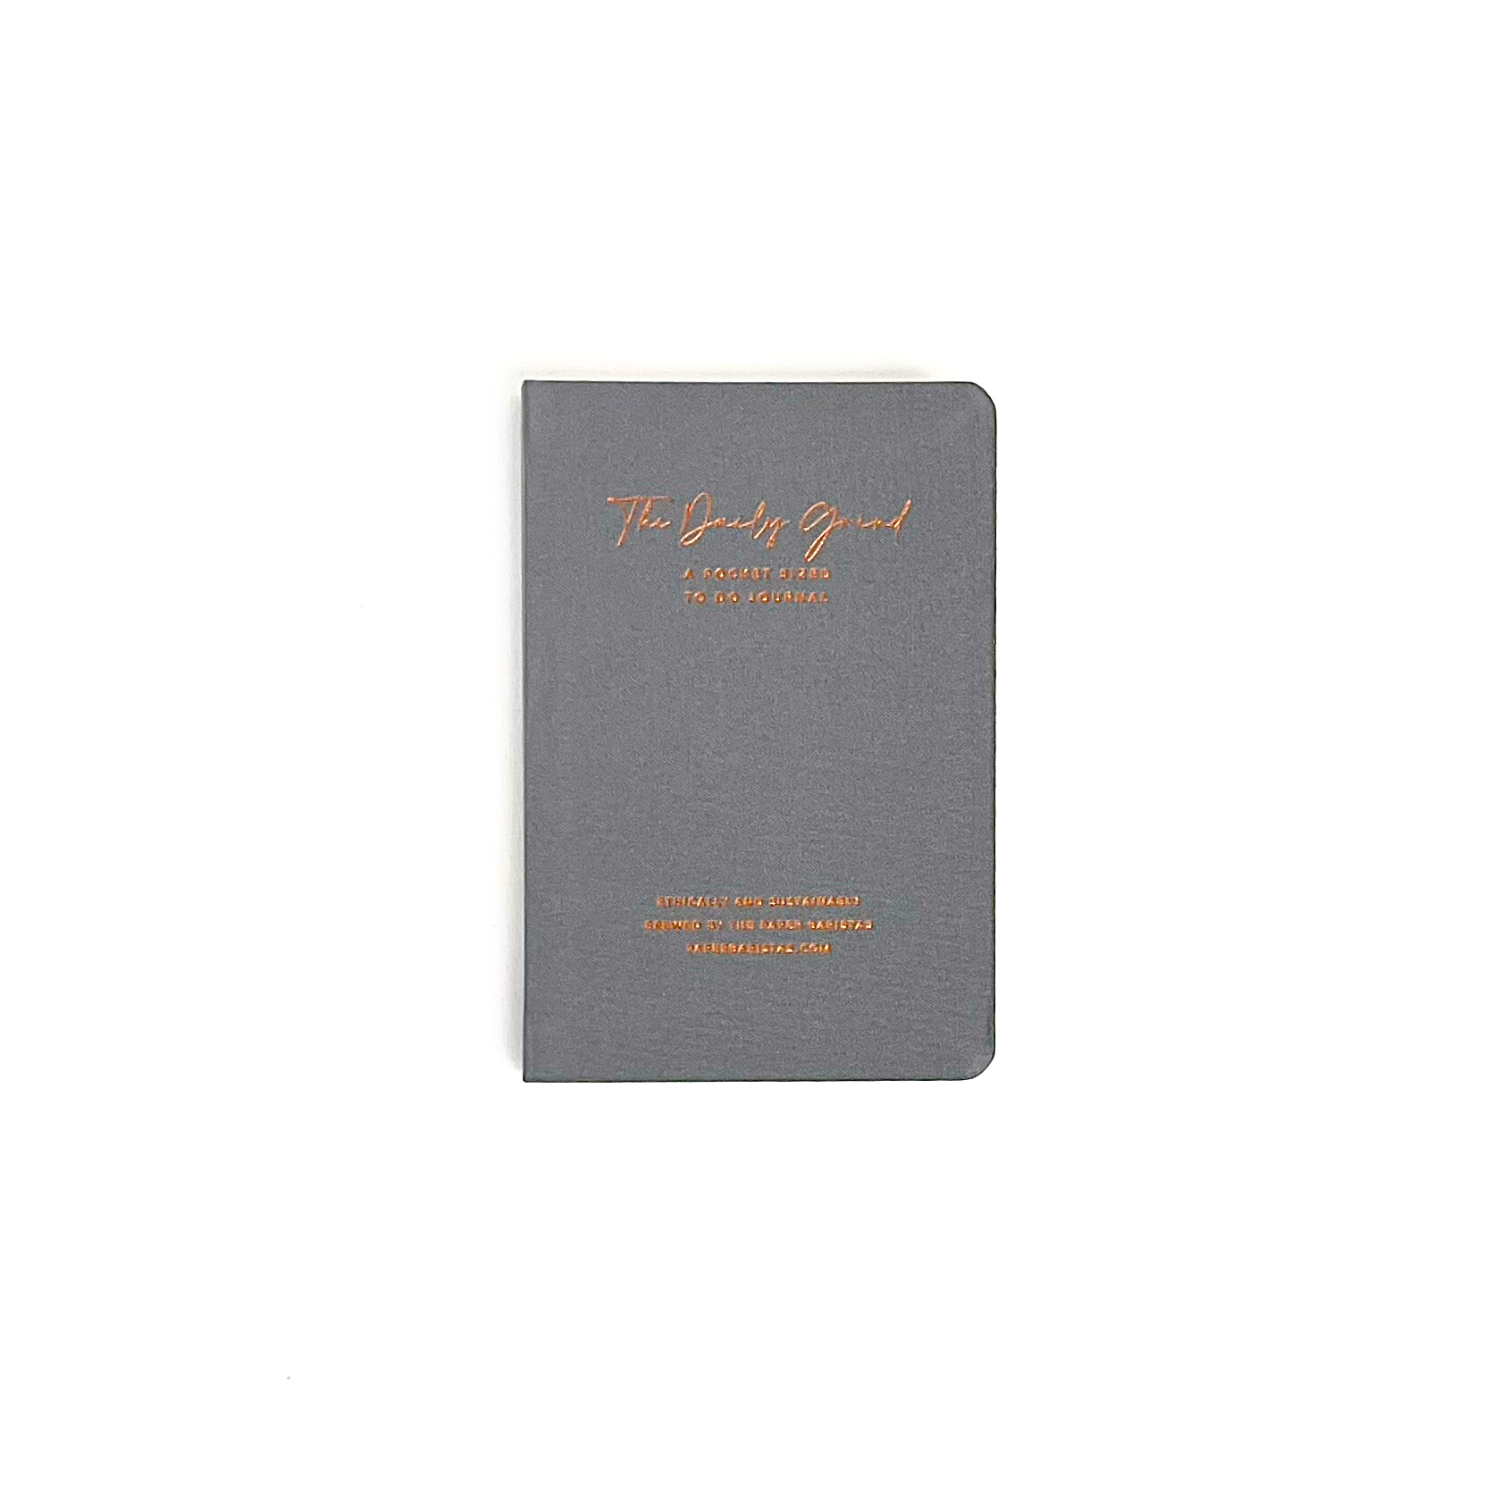 Pocket-Sized To-Do List Notebook Journal in Smoke Grey